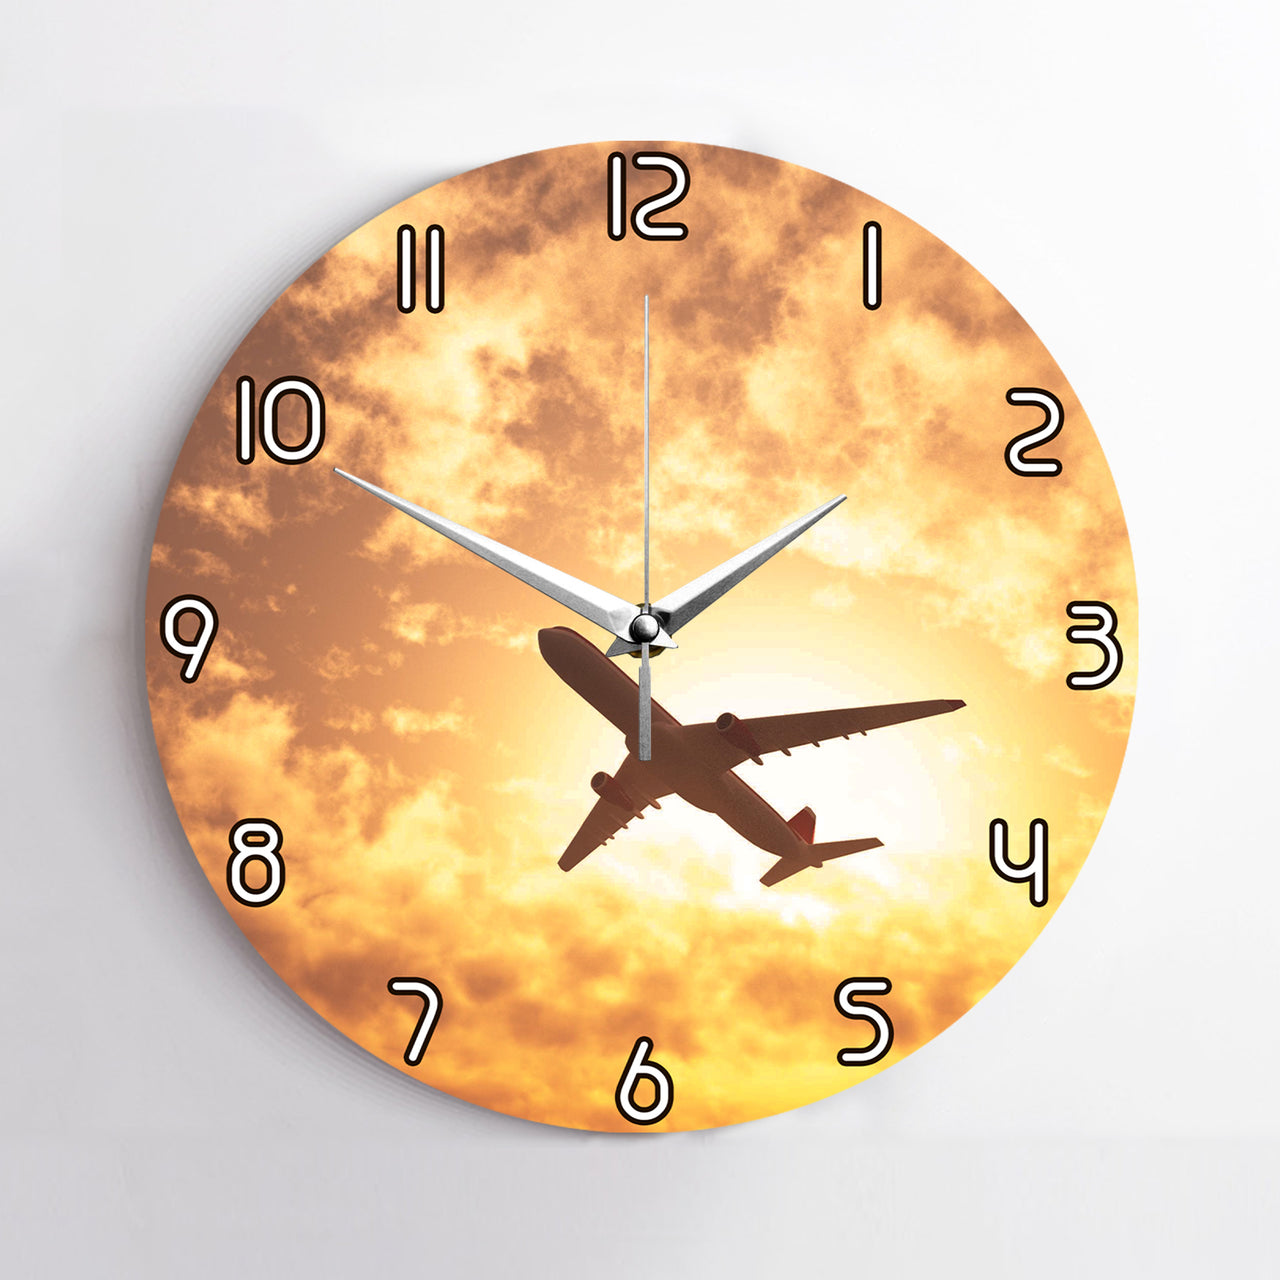 Plane Passing By Printed Wall Clocks